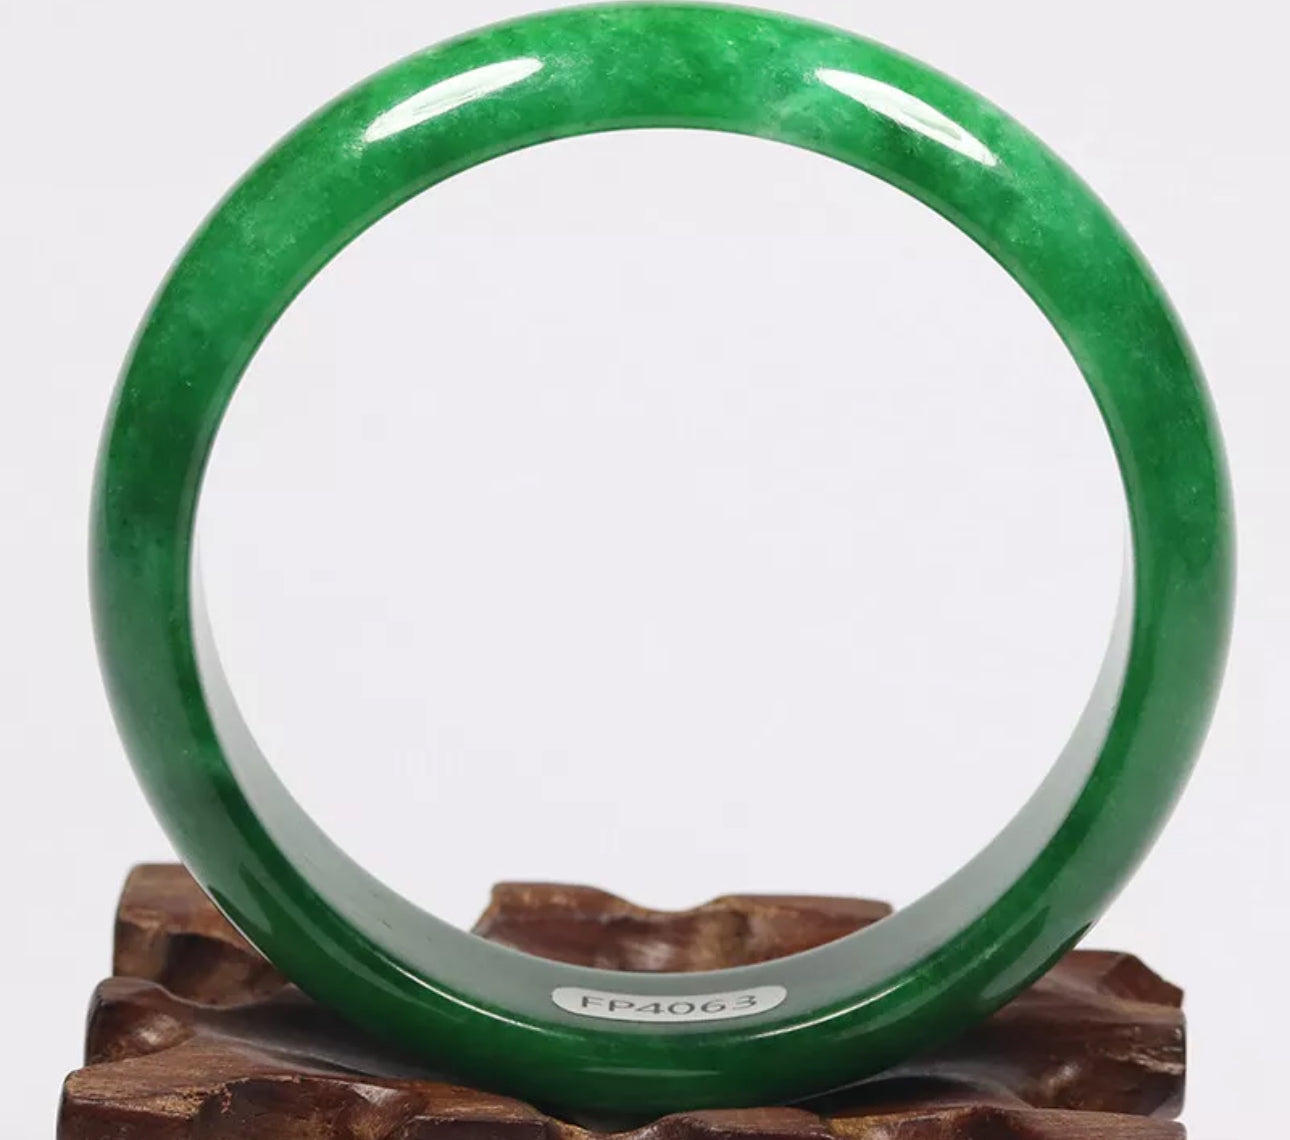 VINTAGE Medium Jadeite Green Jade Bangle Size 59mm A179 Emerald Green Jade!